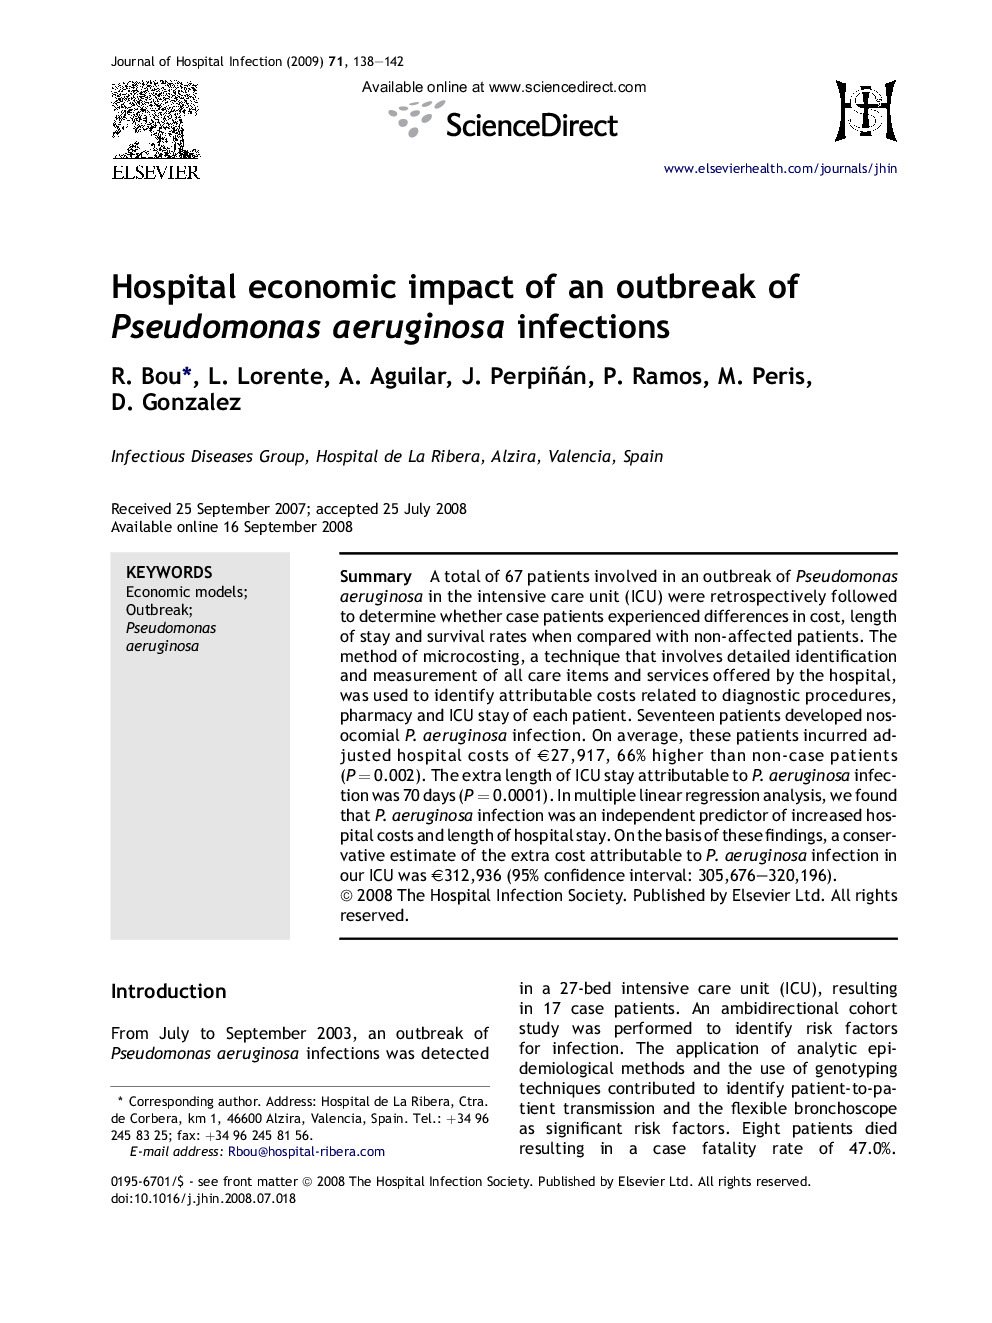 Hospital economic impact of an outbreak of Pseudomonas aeruginosa infections